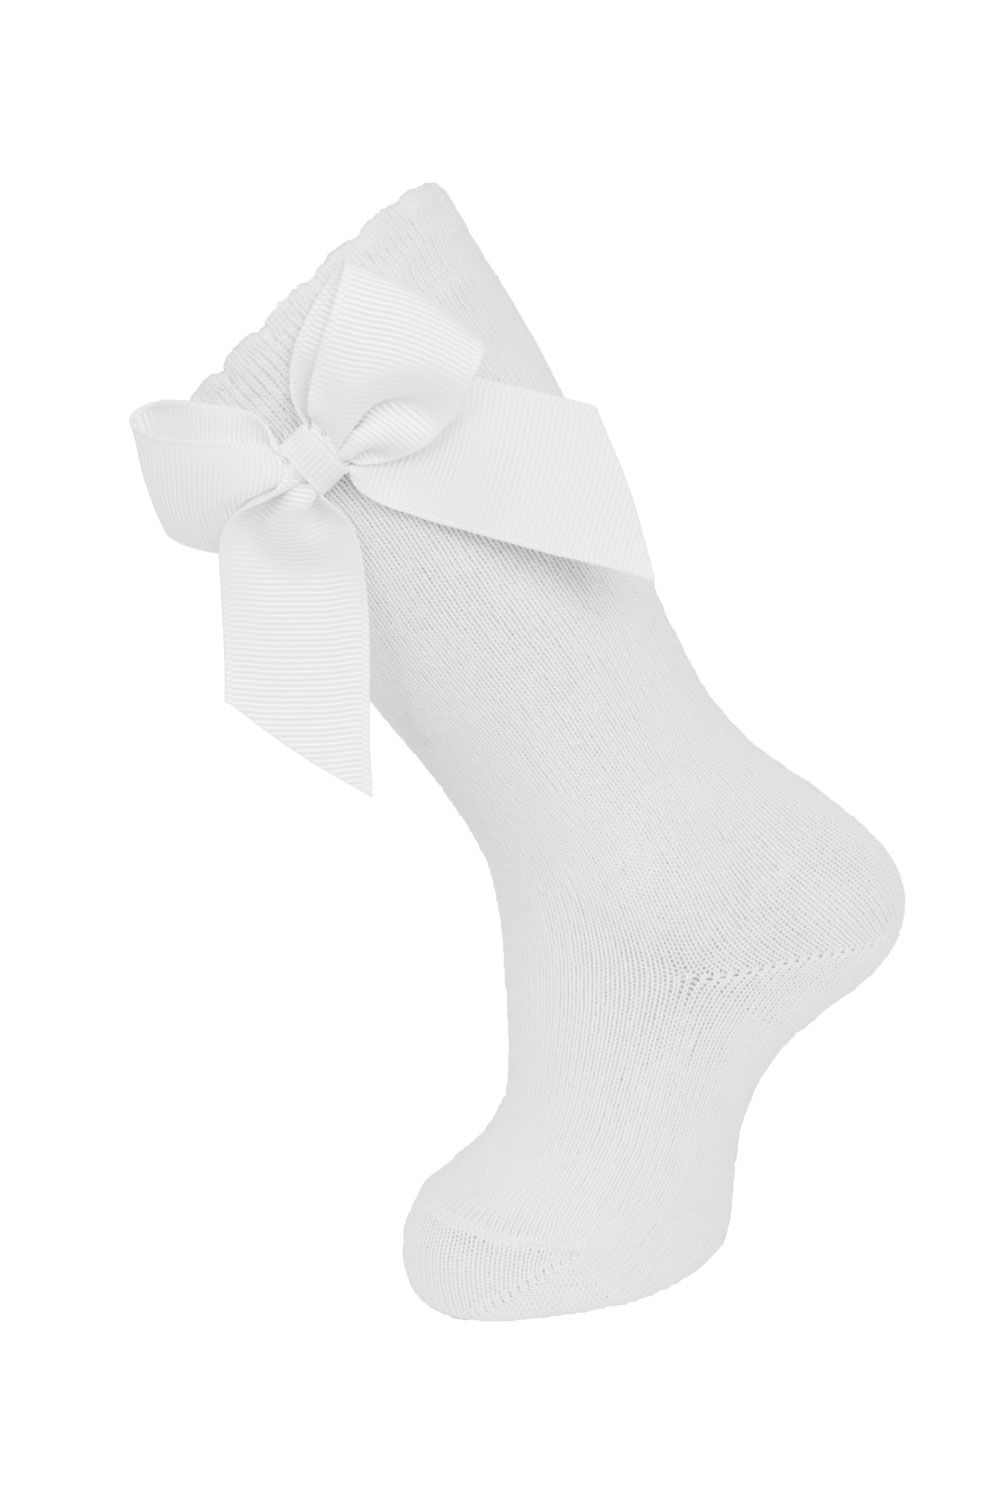 Carlomagno Knee Sock with Gross Grain Side Bow - White